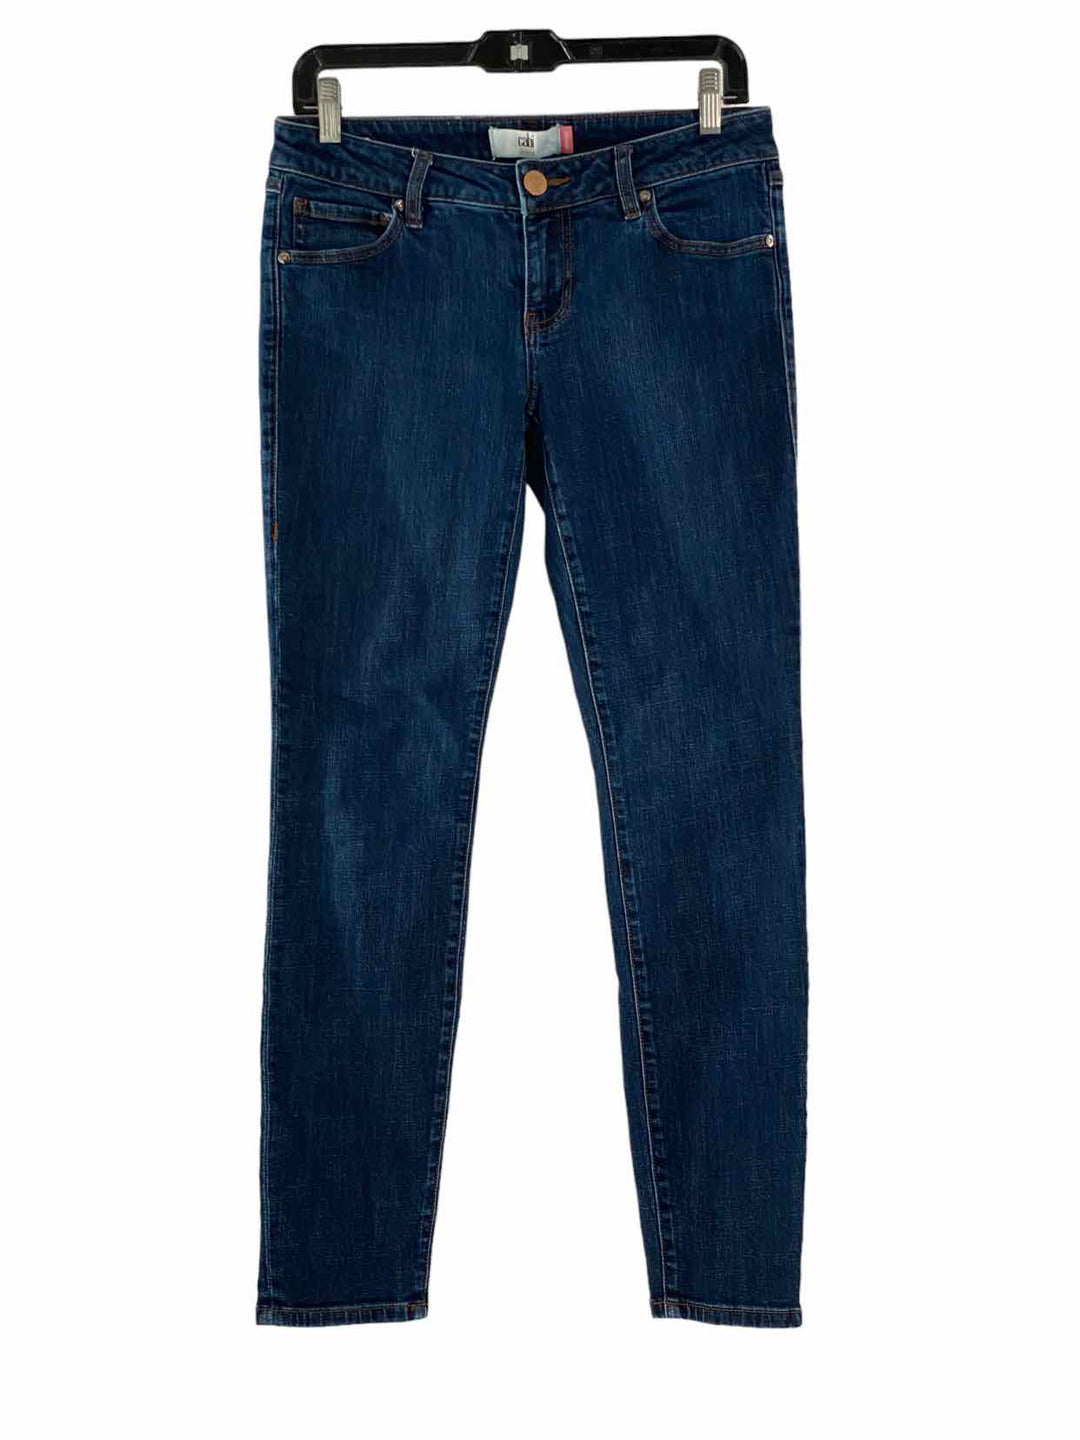 Cabi Size 4 Blue Denim Jeans